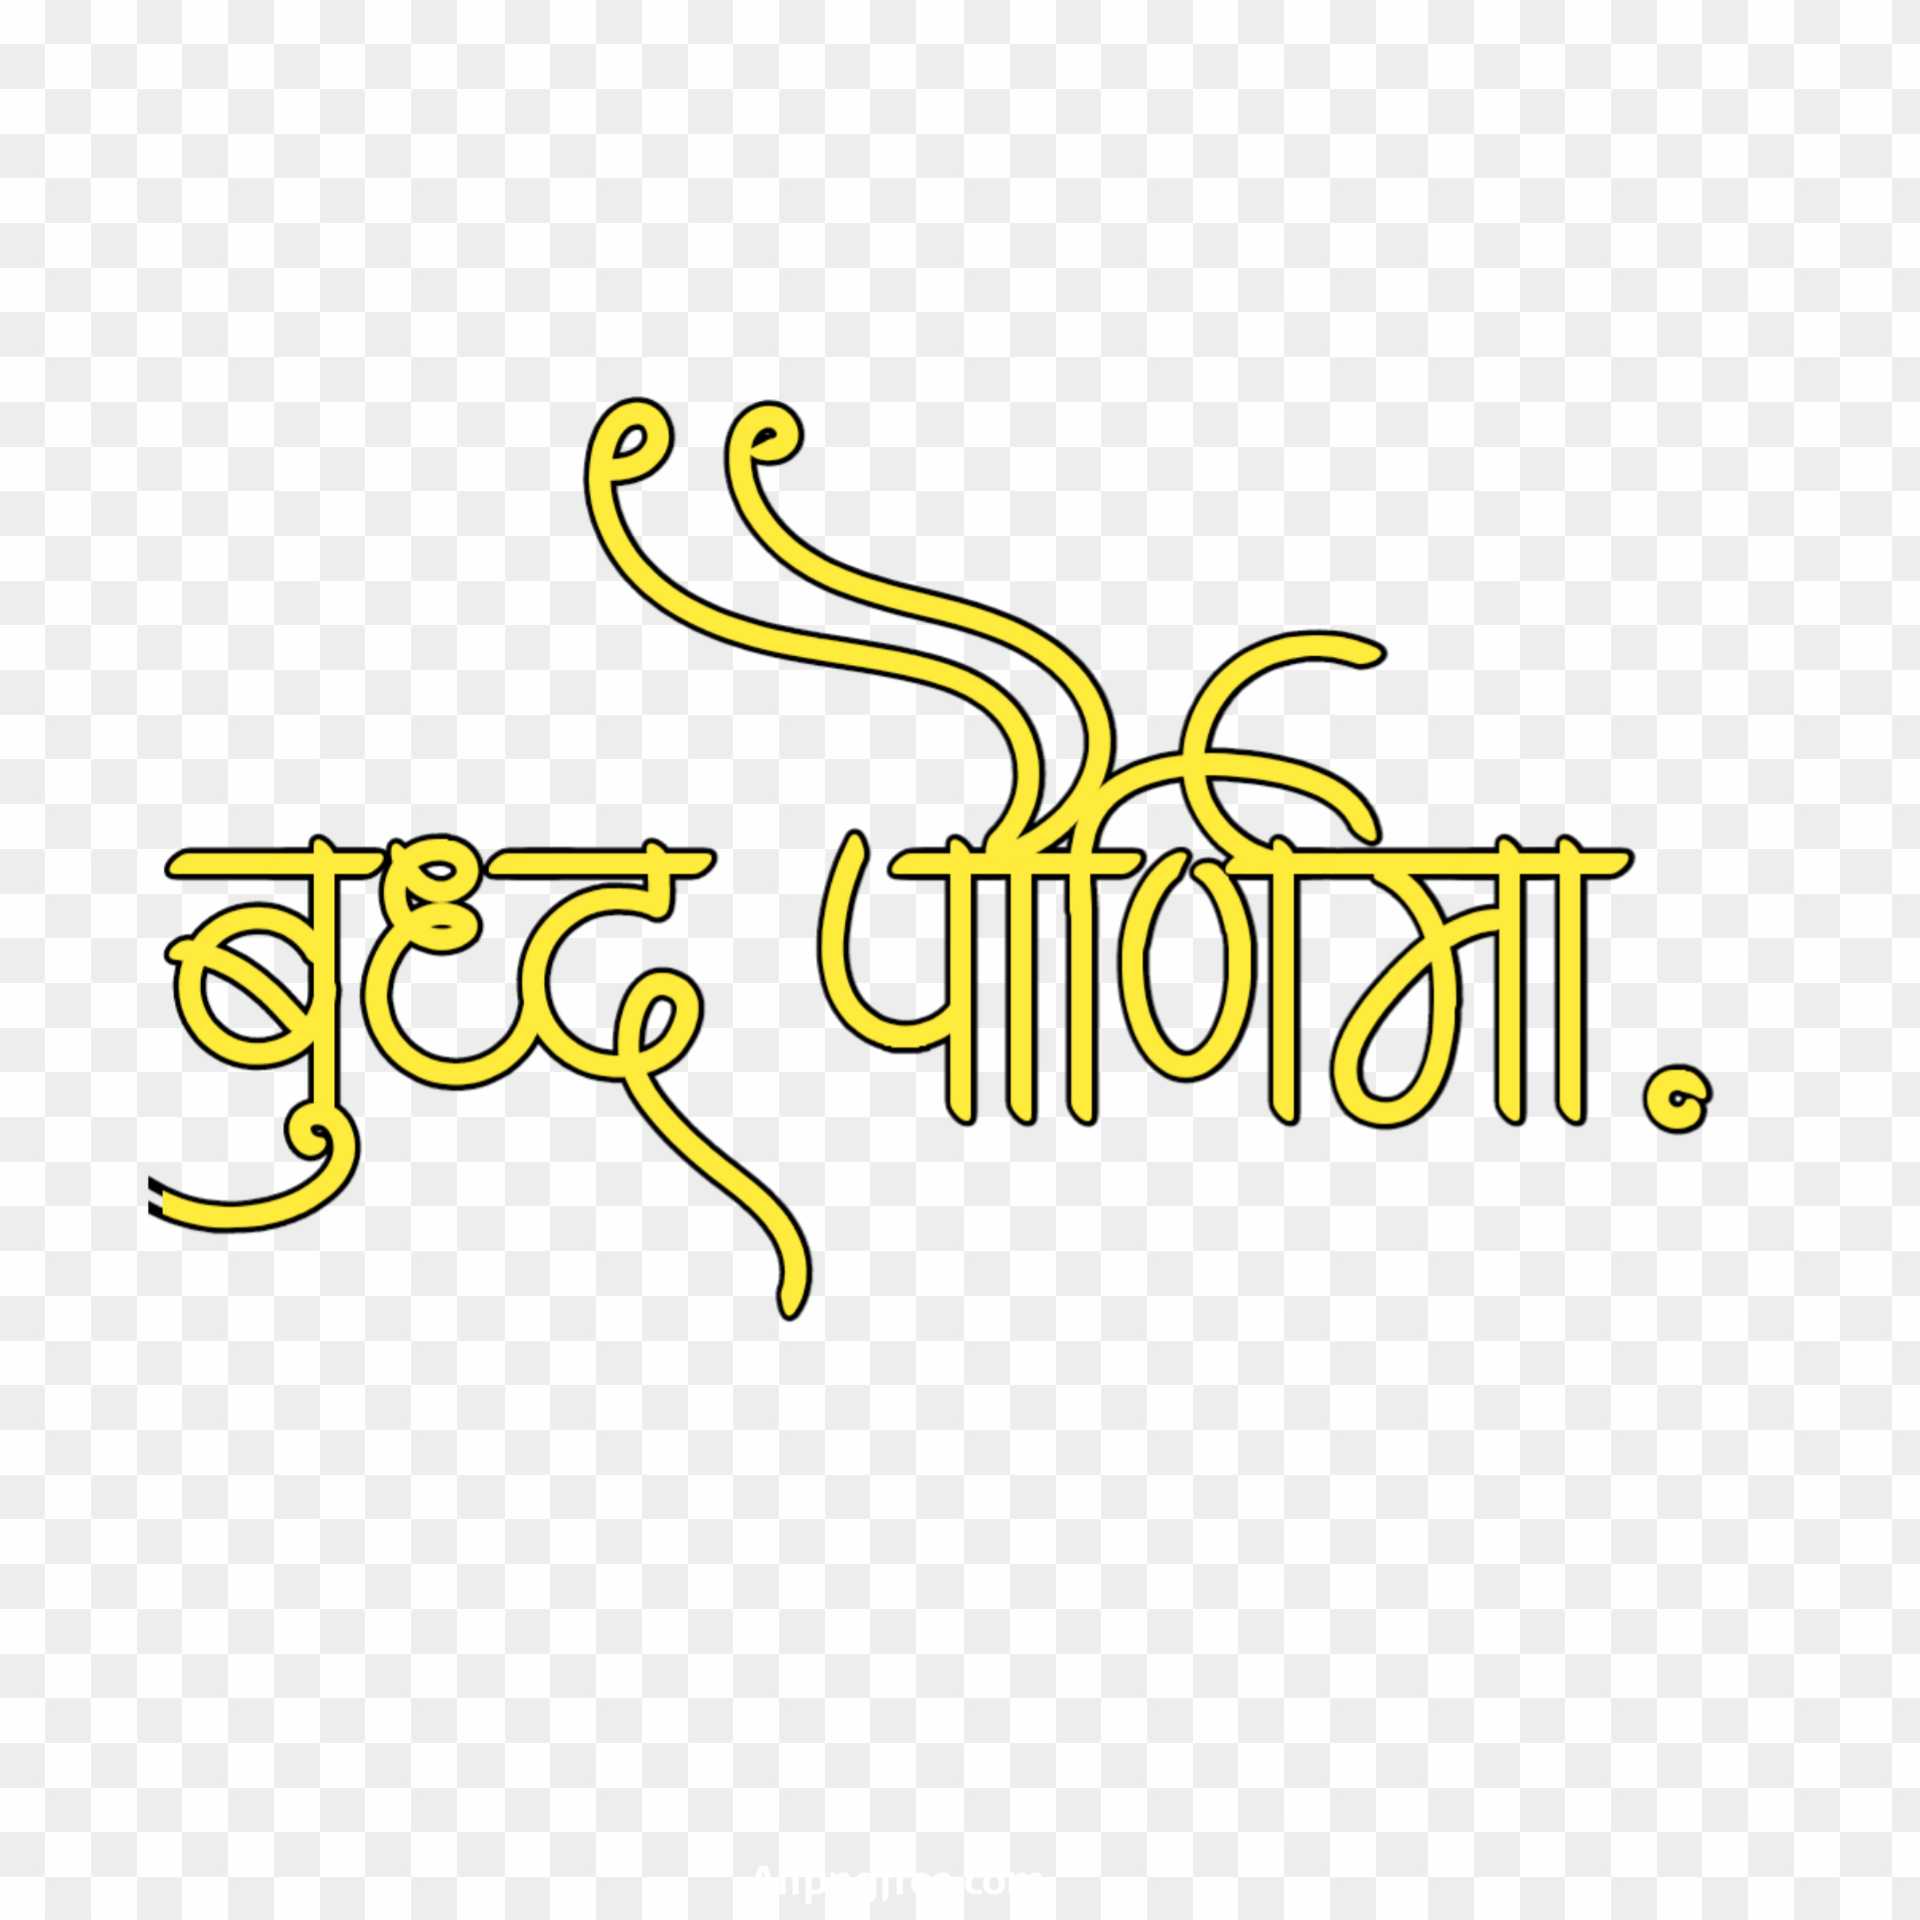 Buddh Purnima Hindi text PNG images download